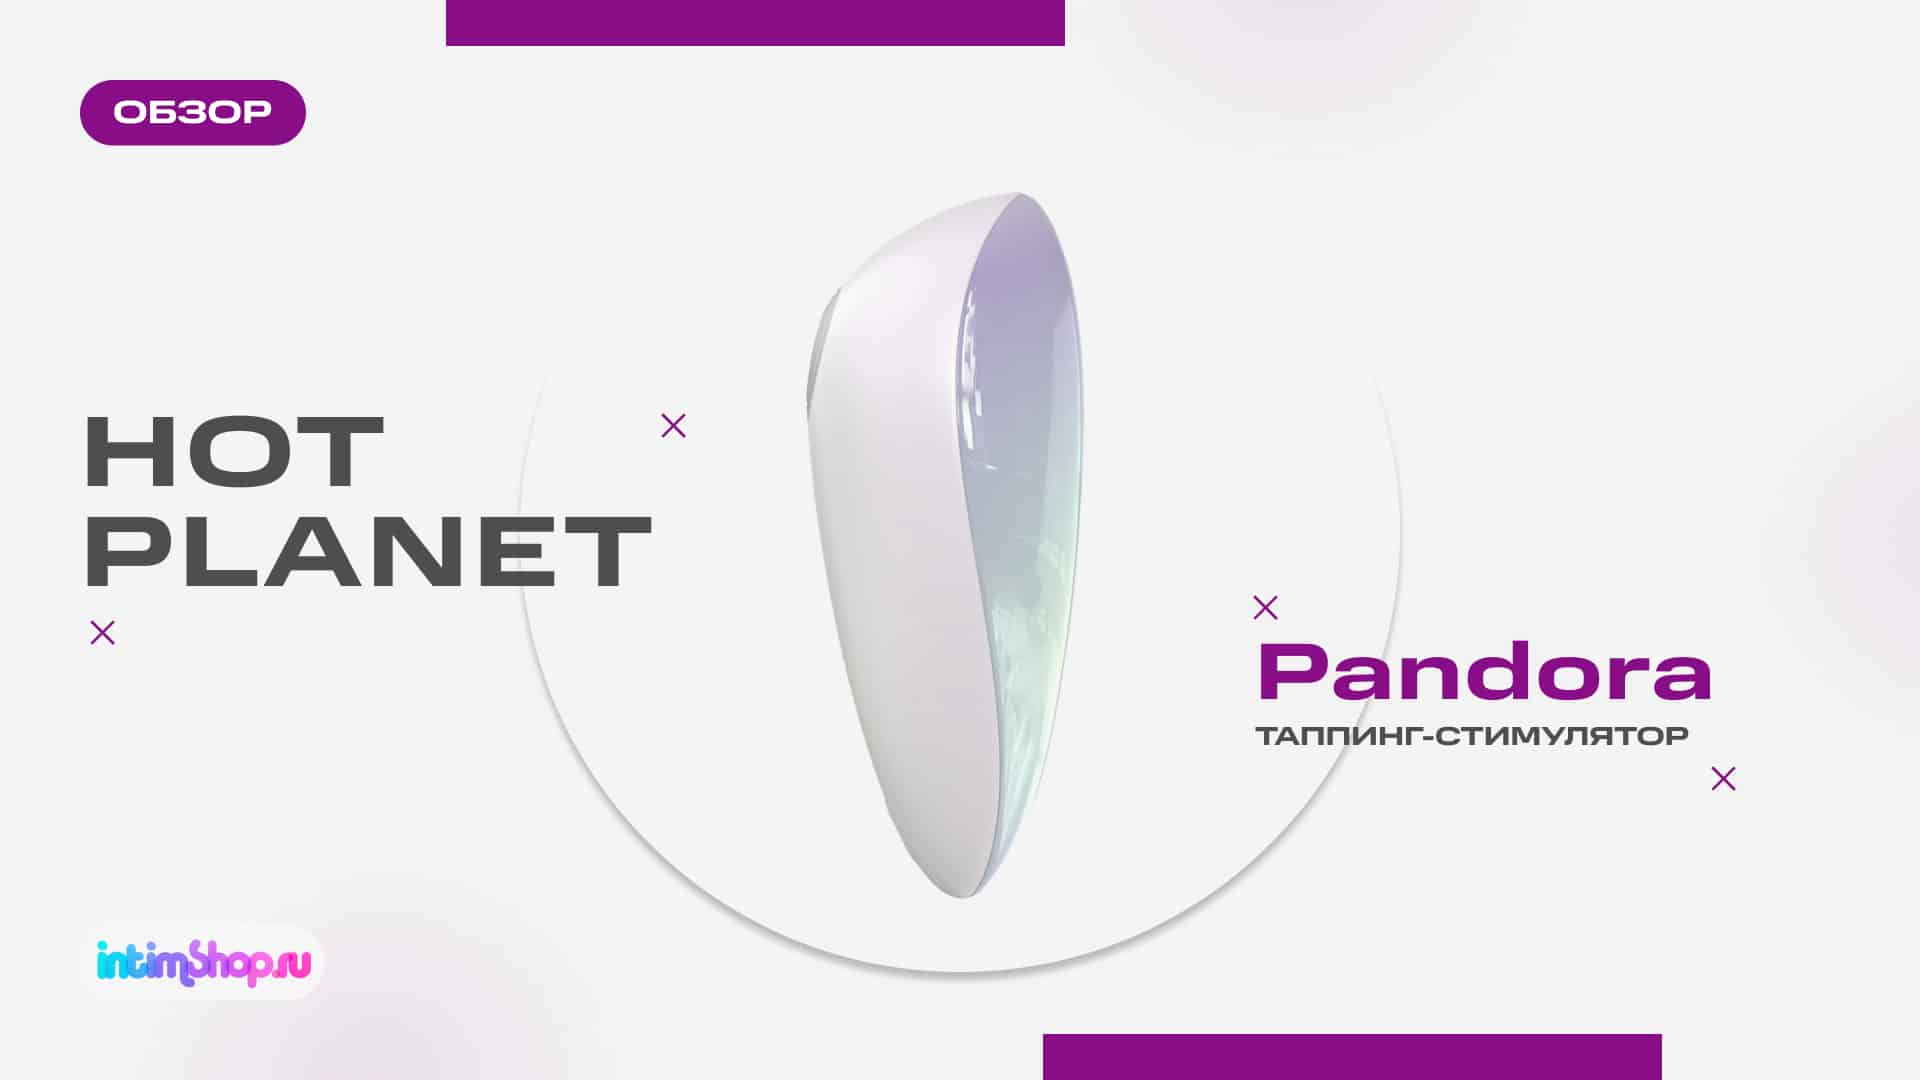 Таппинг-стимулятор Pandora - долгожданная новинка от бренда Hot Planet